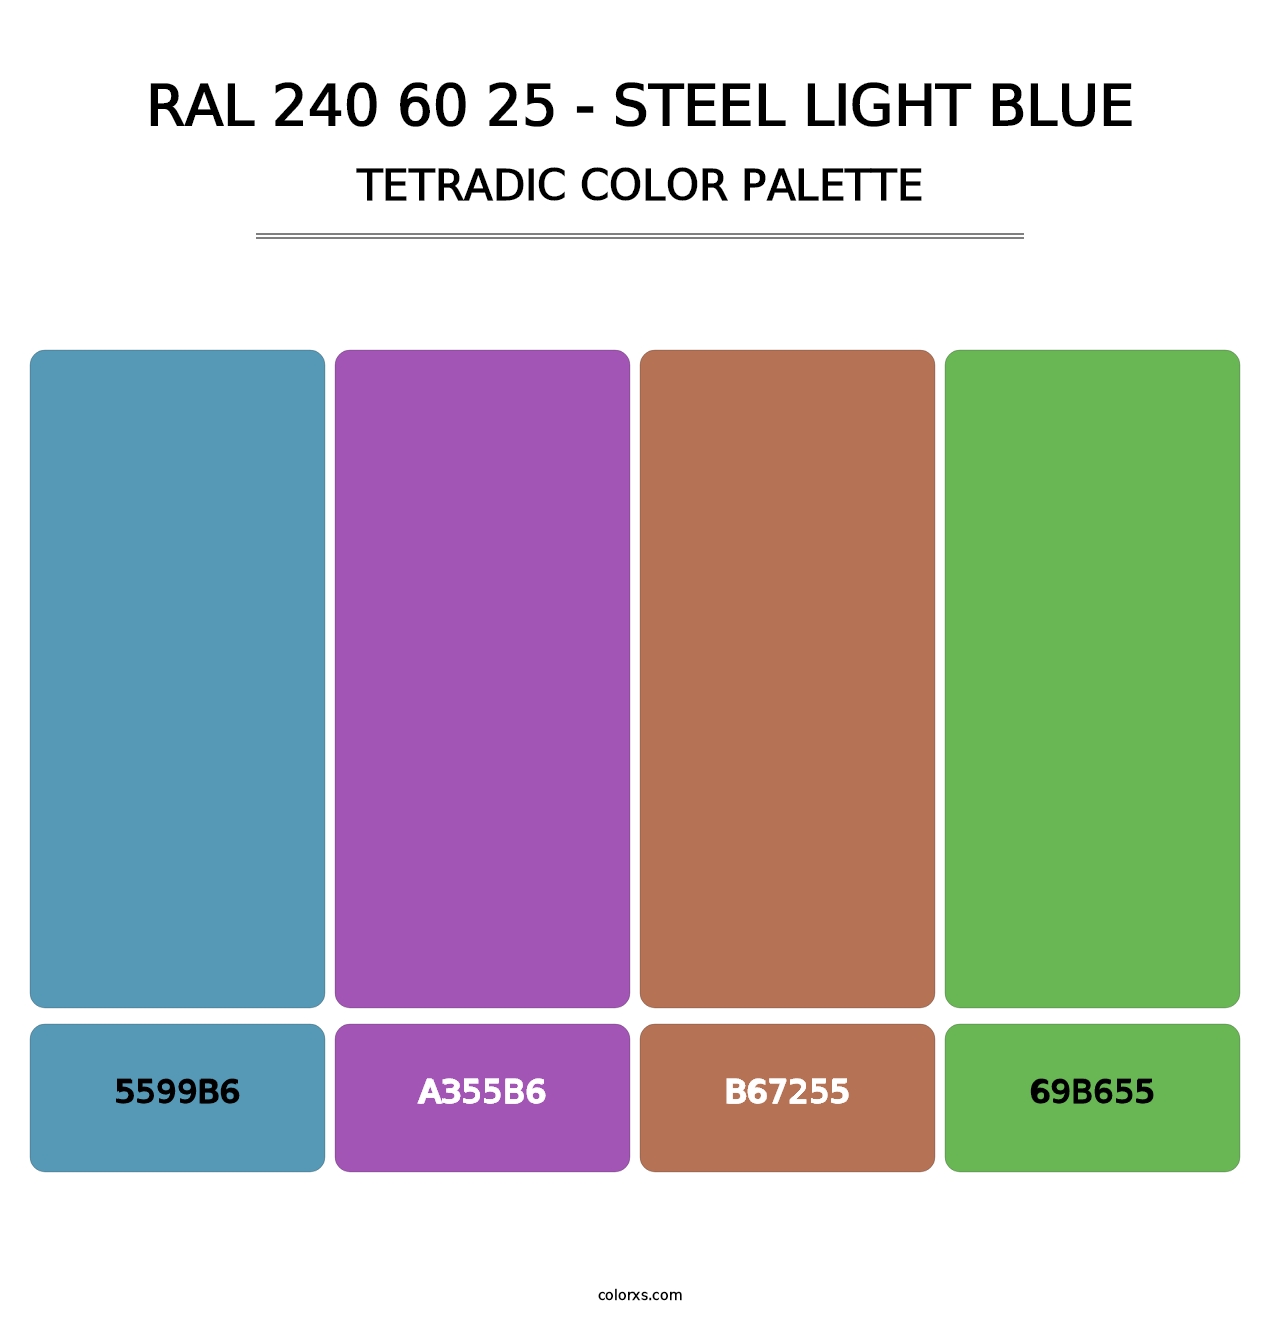 RAL 240 60 25 - Steel Light Blue - Tetradic Color Palette